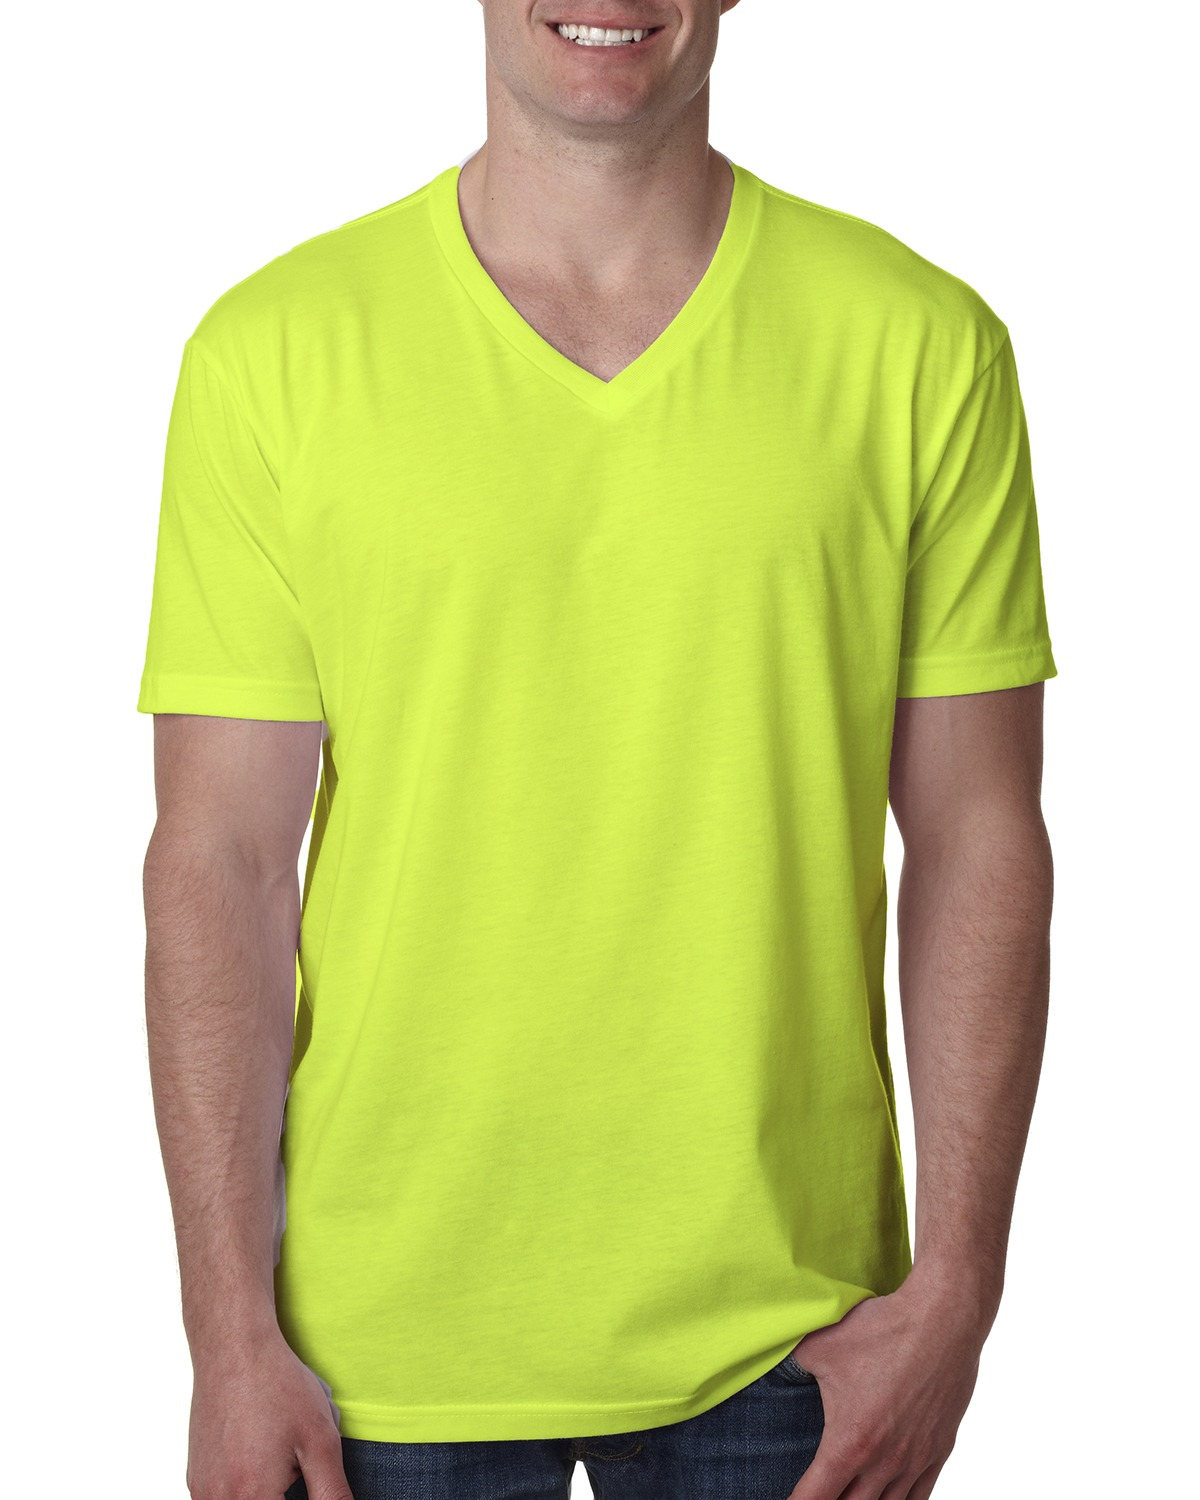 Next Level Apparel 6240 Mens Short Sleeve Premium CVC V Neck Stylish T-Shirt